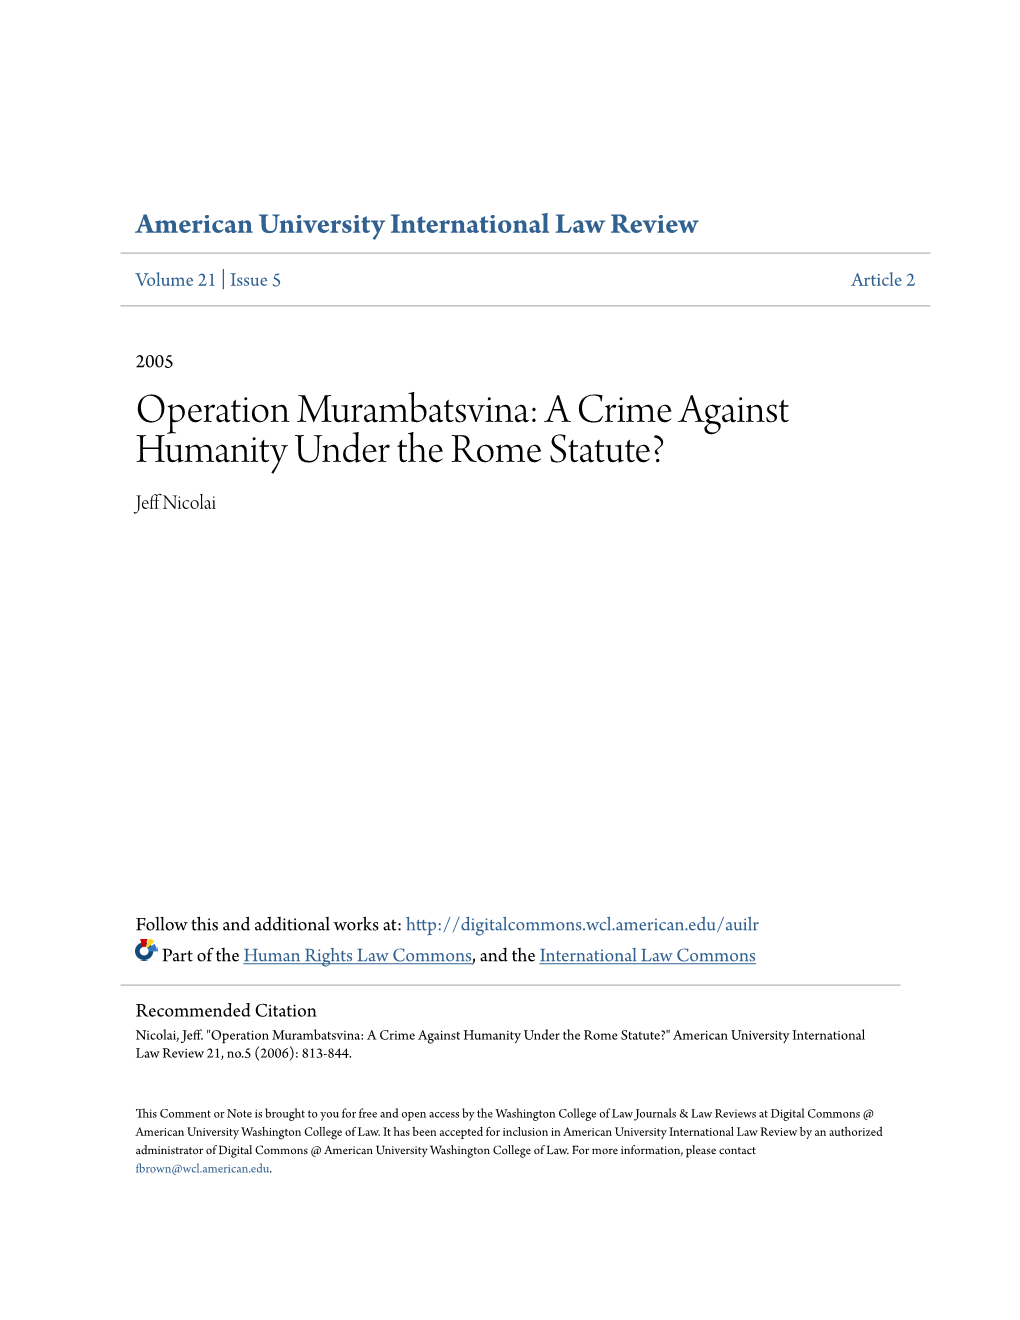 Operation Murambatsvina: a Crime Against Humanity Under the Rome Statute? Jeff Icoln Ai